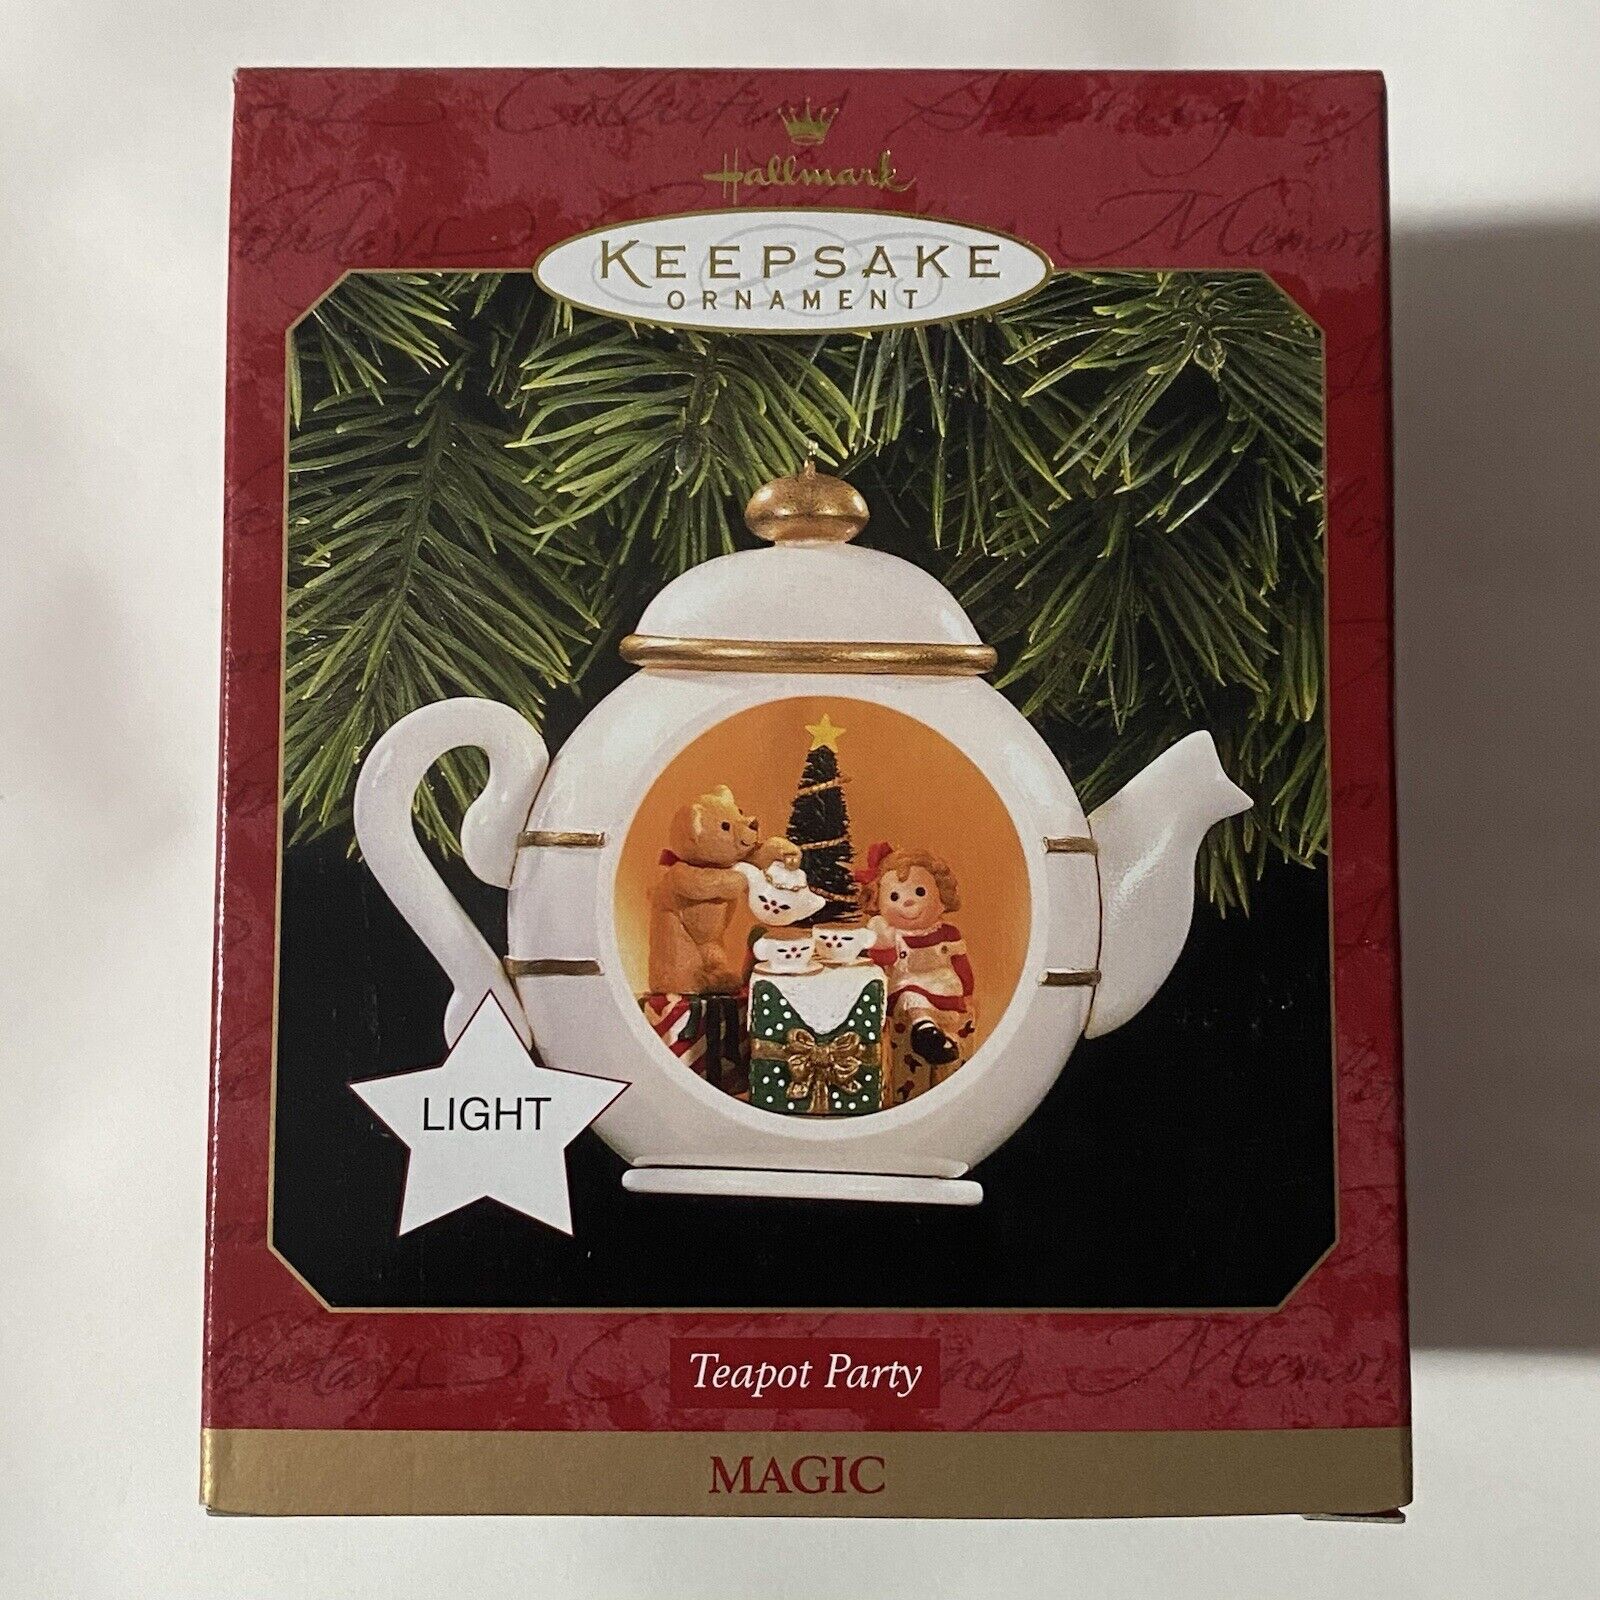 1997 Hallmark Keepsake Christmas Holiday Ornament Teapot Party Magic Light